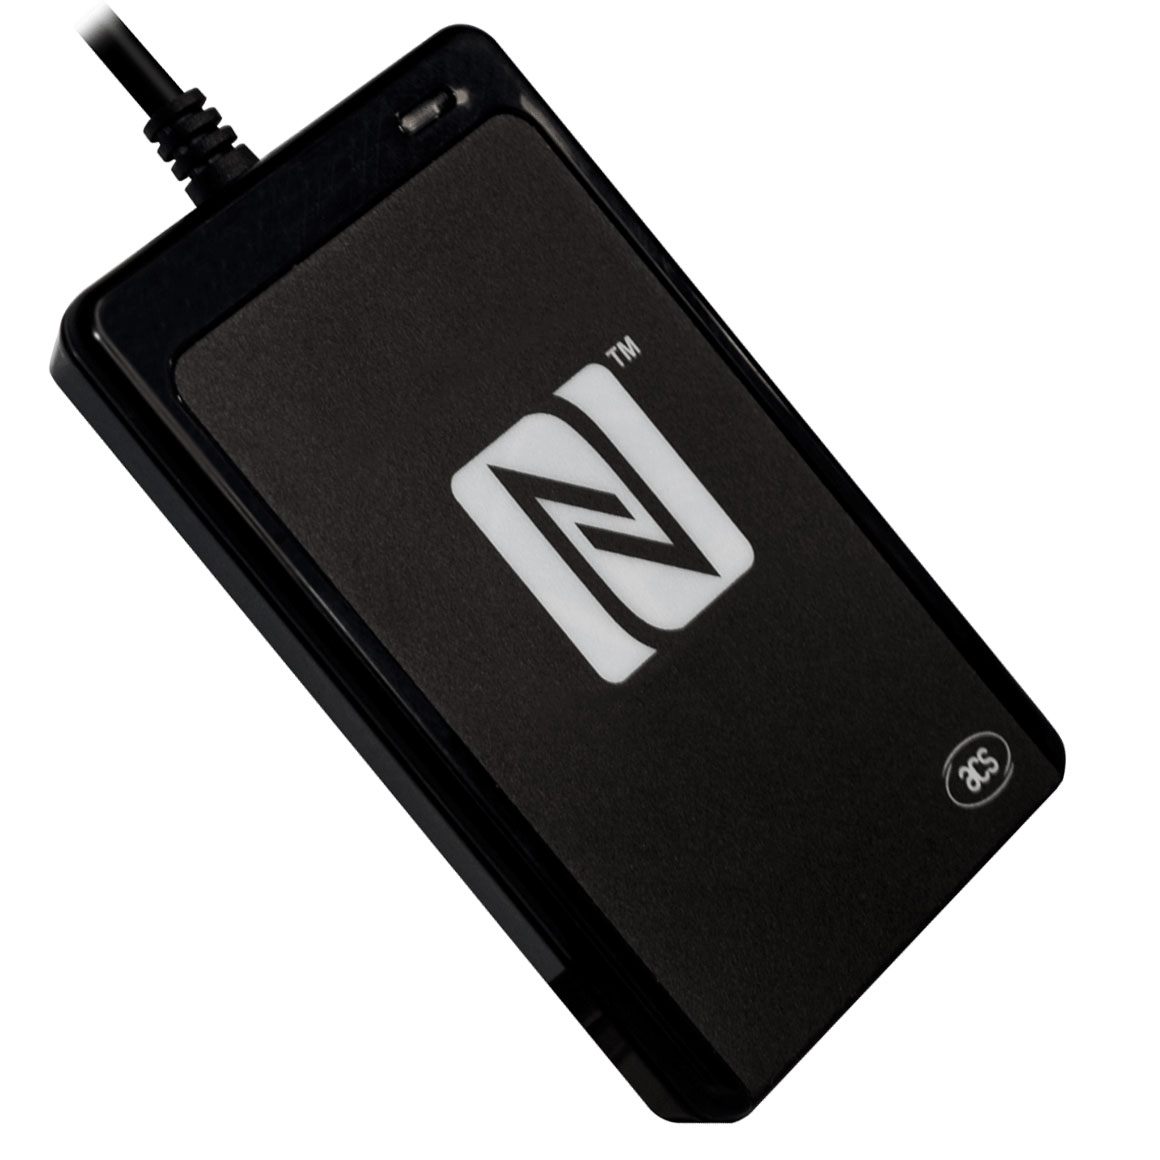 Contactless Near Field Communication (NFC) PC/SC Forum-Certified Reader ACR1252U USB 2.0 ...